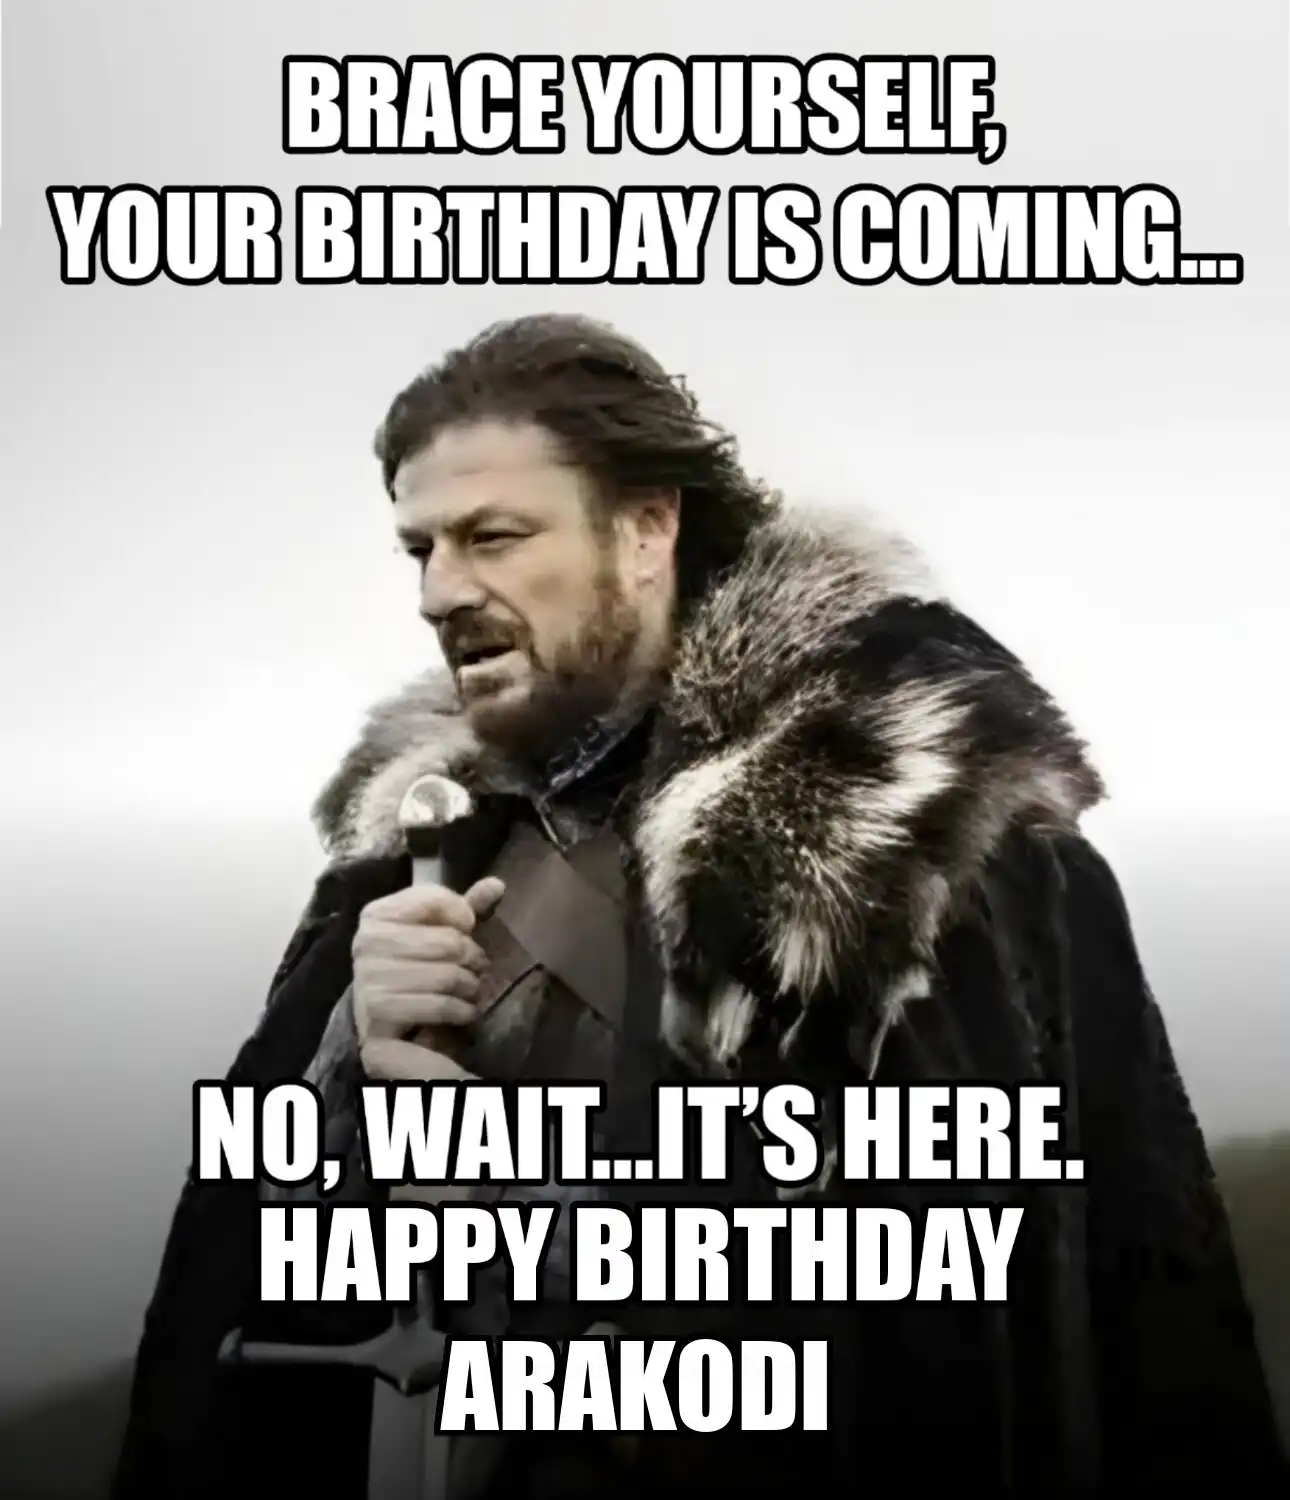 Happy Birthday Arakodi Brace Yourself Your Birthday Is Coming Meme